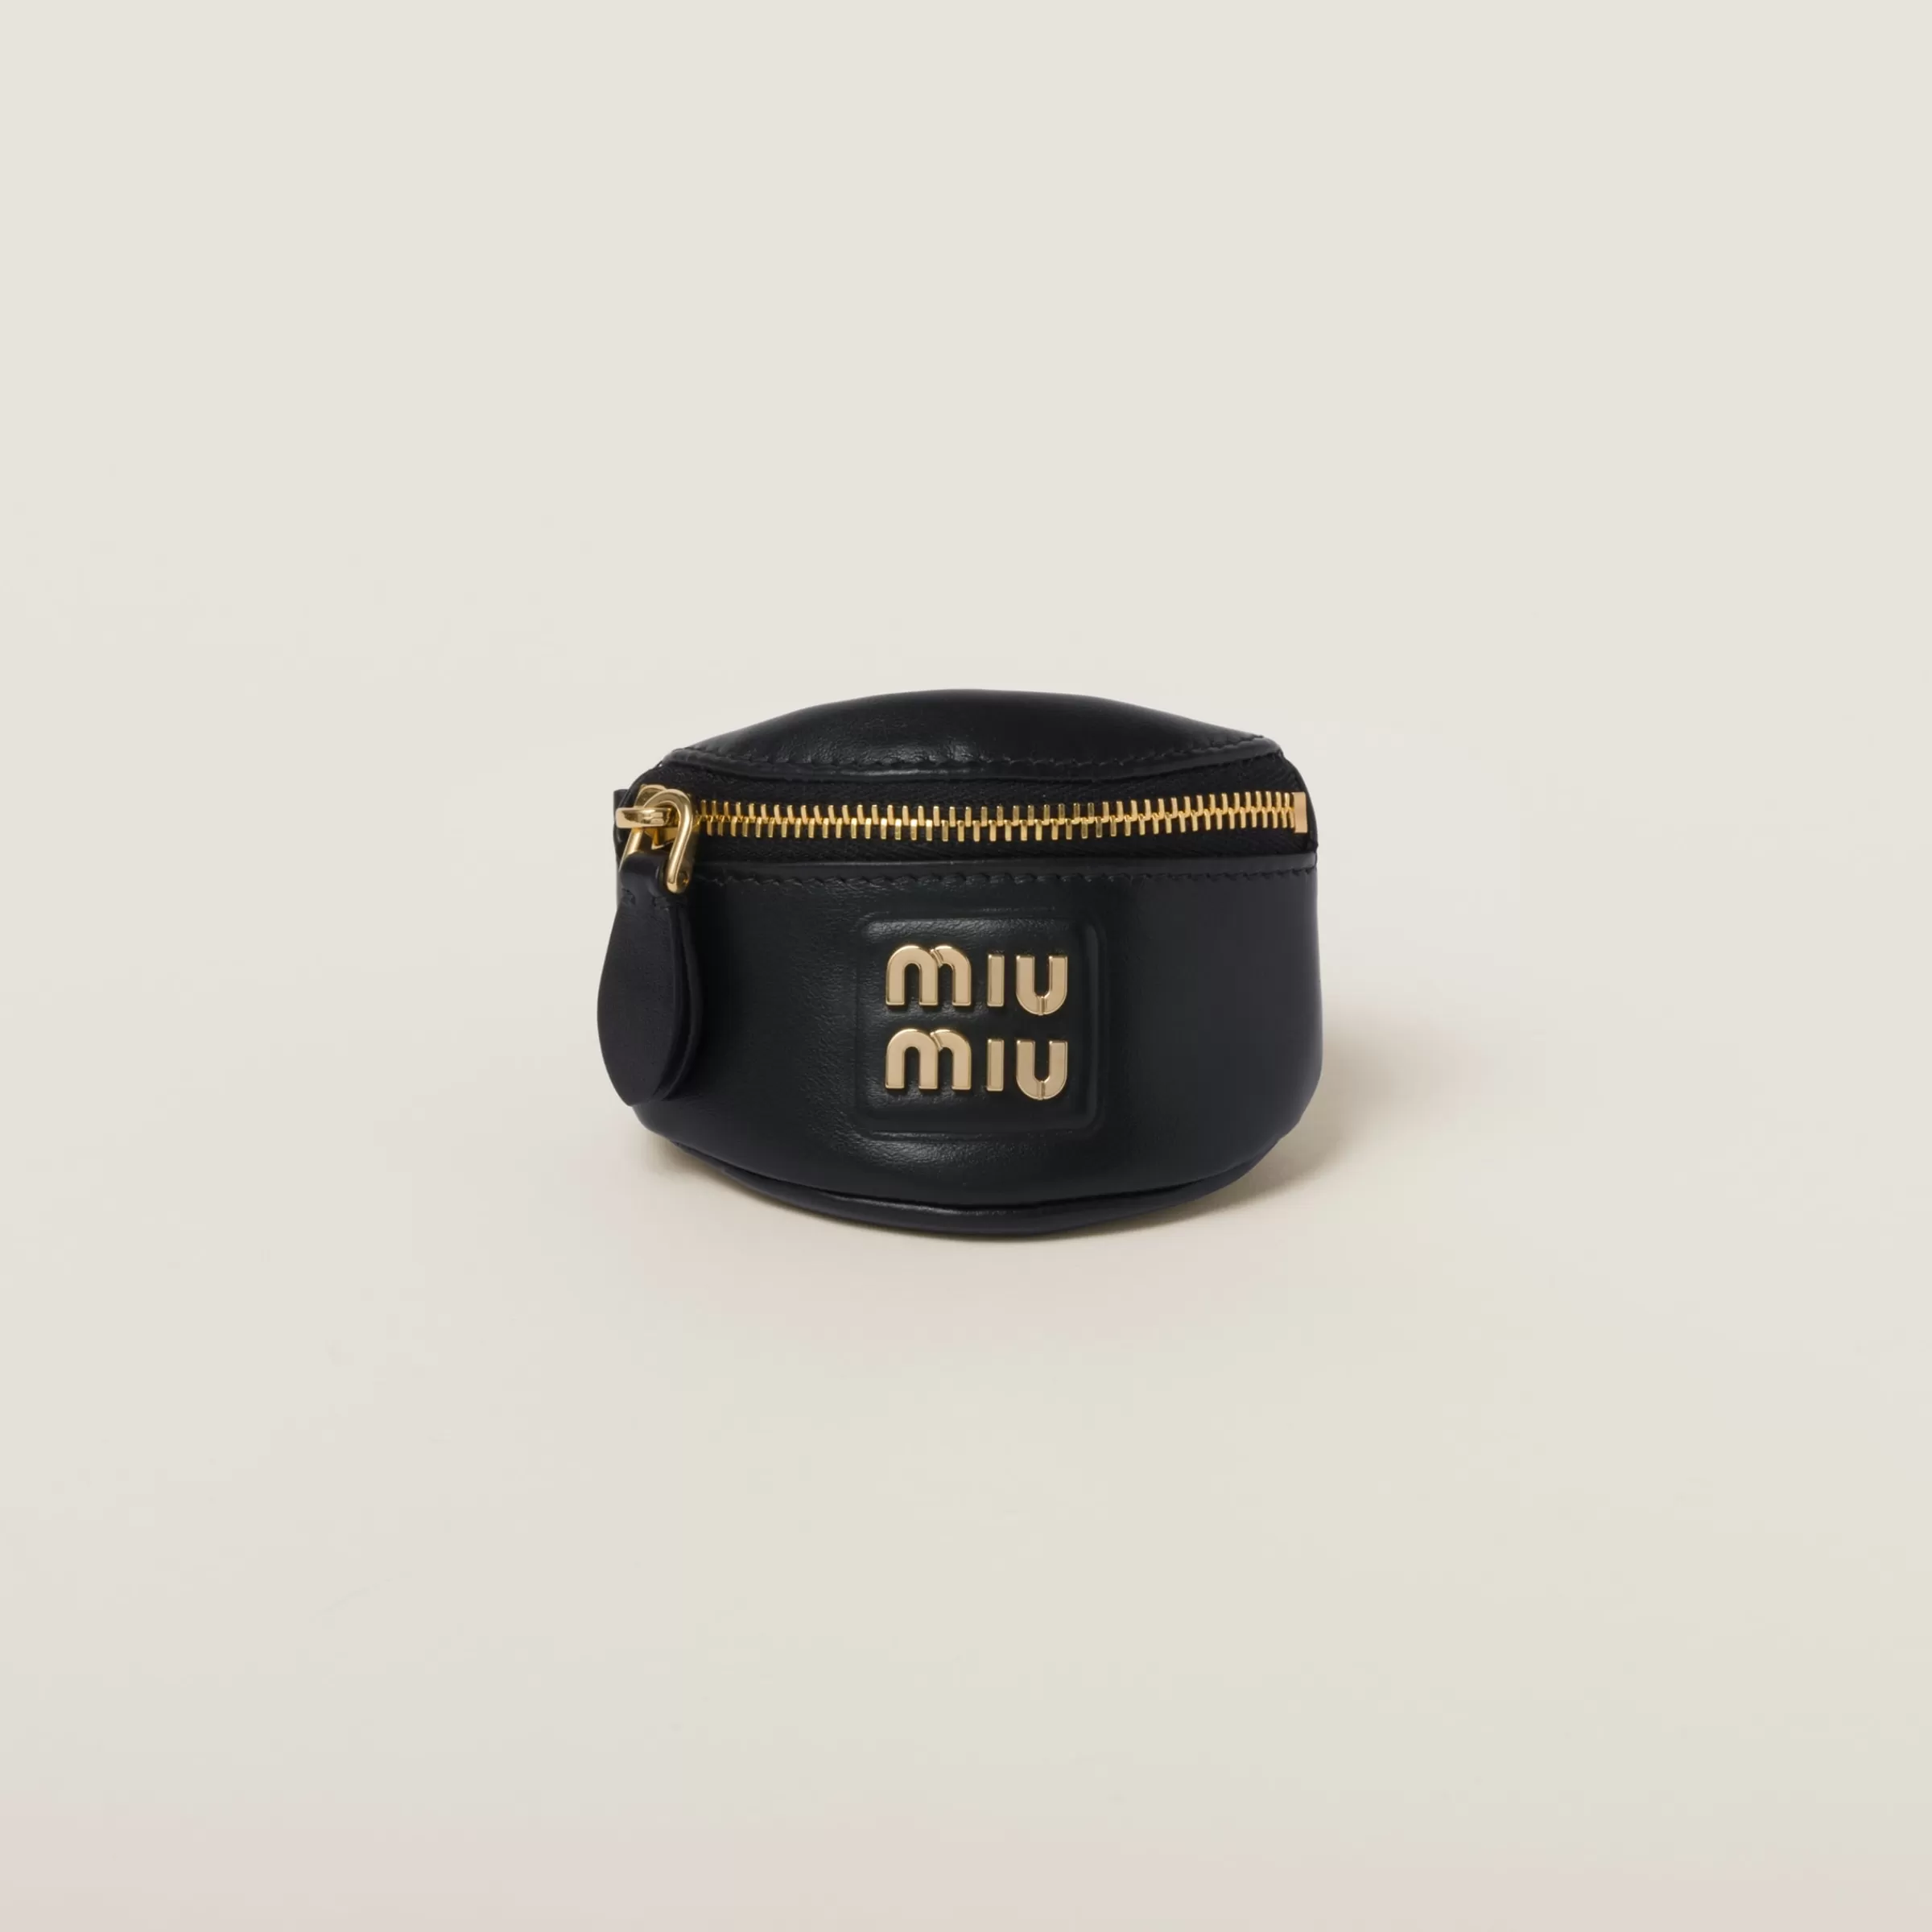 Miu Miu Bracelet With Leather Mini-pouch |